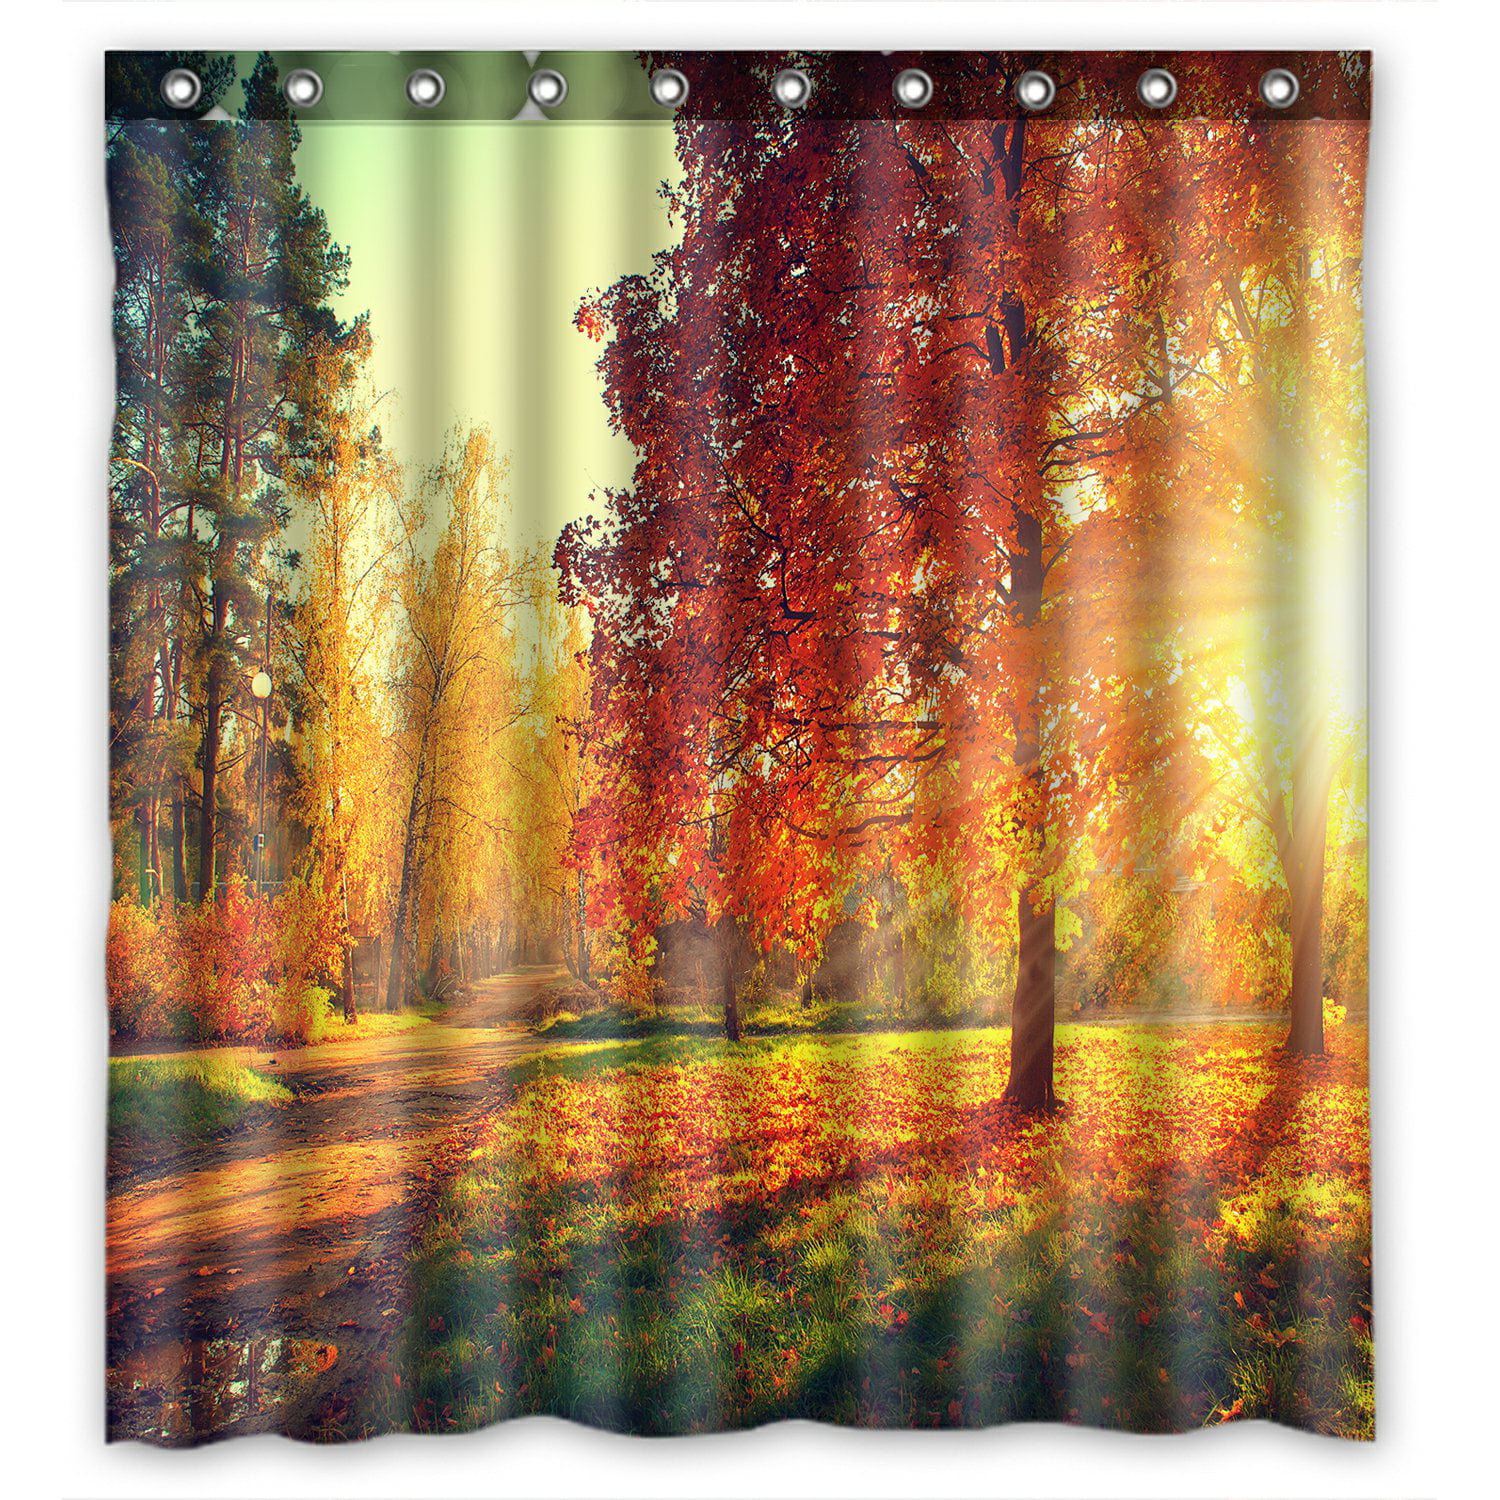 PHFZK Autumn Scene Shower Curtain, Autumn Trees and Leaves in Sun Light ...